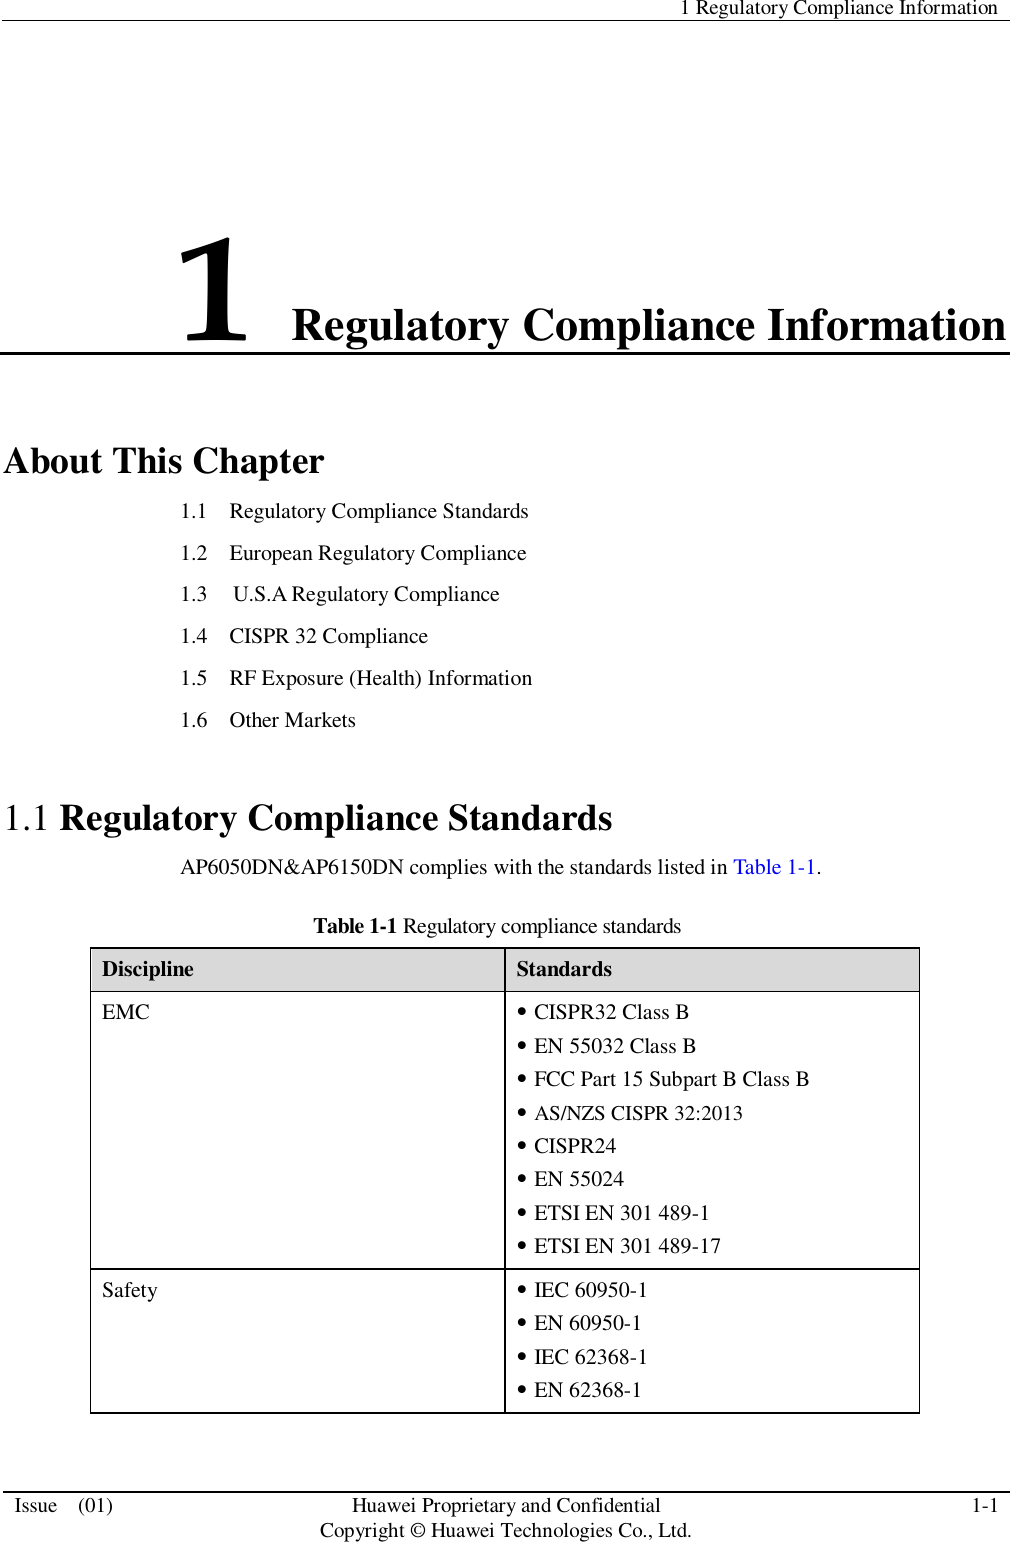   1 Regulatory Compliance Information  Issue    (01) Huawei Proprietary and Confidential                                     Copyright © Huawei Technologies Co., Ltd. 1-1  1 Regulatory Compliance Information About This Chapter 1.1    Regulatory Compliance Standards 1.2    European Regulatory Compliance 1.3    U.S.A Regulatory Compliance 1.4  CISPR 32 Compliance 1.5    RF Exposure (Health) Information 1.6  Other Markets 1.1 Regulatory Compliance Standards AP6050DN&amp;AP6150DN complies with the standards listed in Table 1-1. Table 1-1 Regulatory compliance standards Discipline Standards EMC  CISPR32 Class B  EN 55032 Class B  FCC Part 15 Subpart B Class B  AS/NZS CISPR 32:2013  CISPR24  EN 55024  ETSI EN 301 489-1    ETSI EN 301 489-17 Safety  IEC 60950-1  EN 60950-1  IEC 62368-1  EN 62368-1 